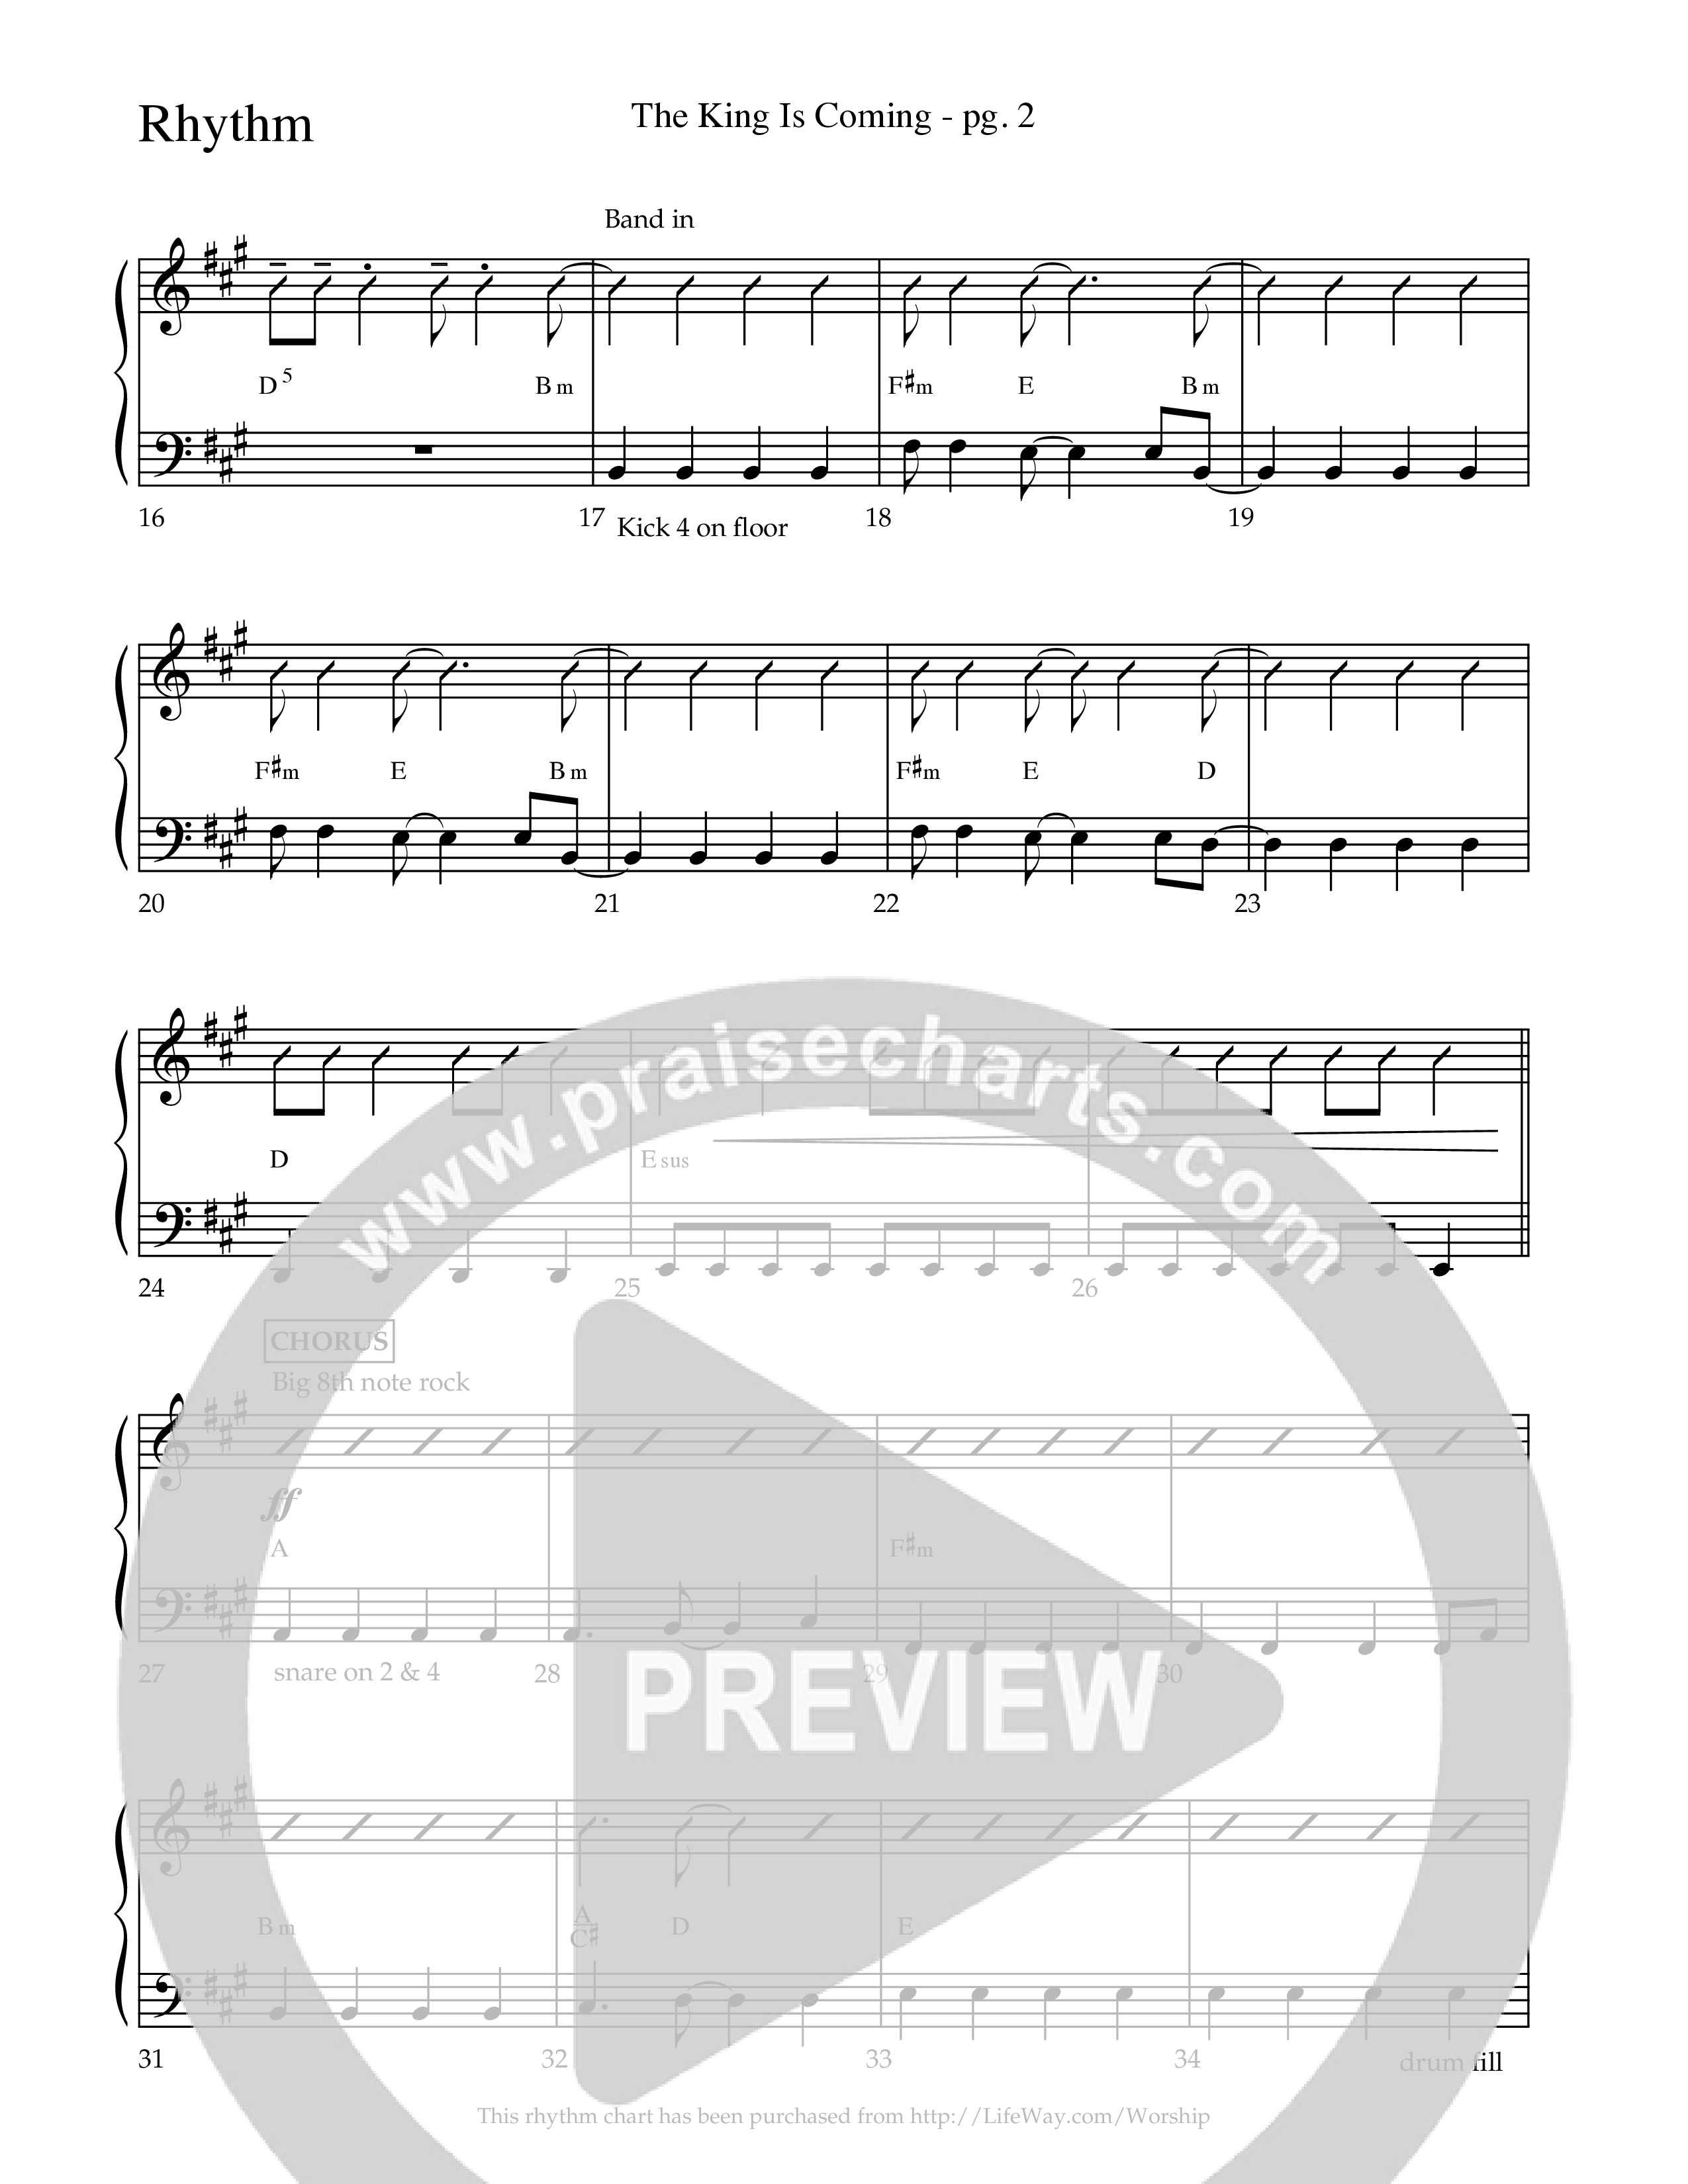 The King Is Coming (Choral Anthem SATB) Lead Melody & Rhythm (Lifeway Choral / Arr. Travis Cottrell)